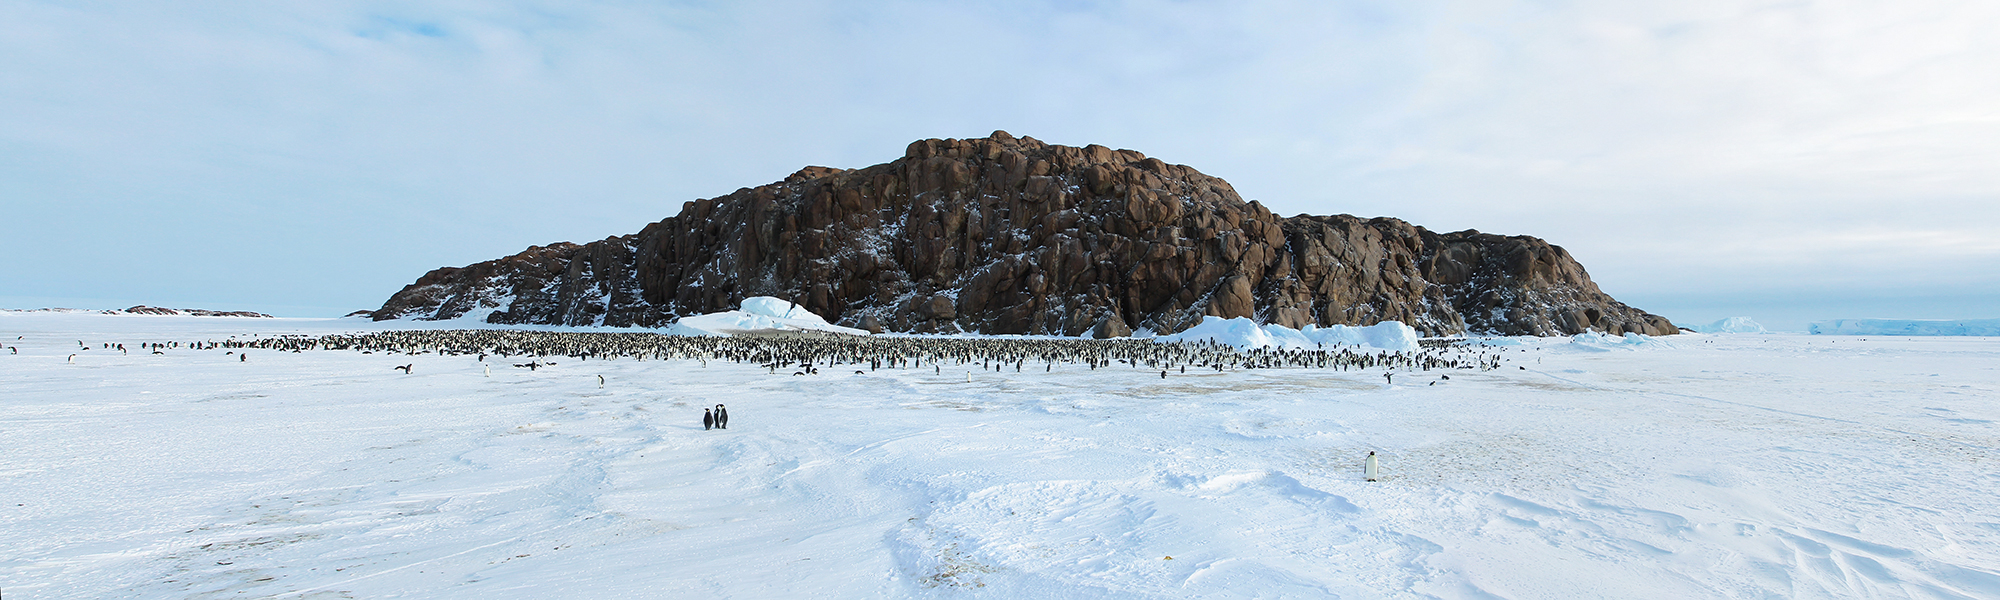 Observation animalière Péninsule antarctique © Sergey / Adobe Stock